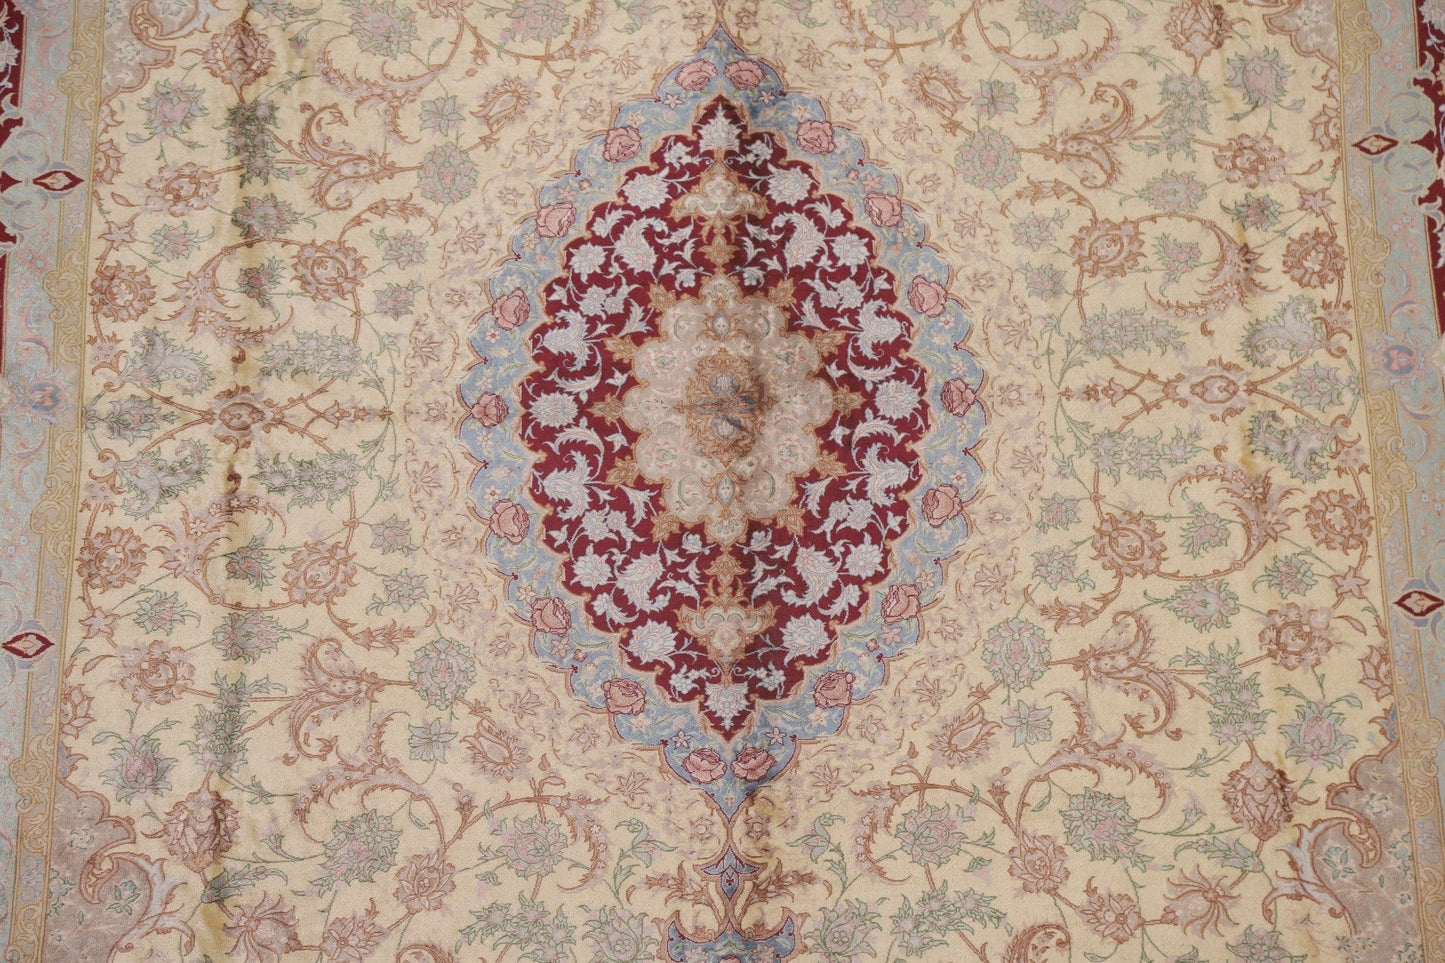 Traditional 100% Silk Qum Persian Area Rug 6x10 SIGNED